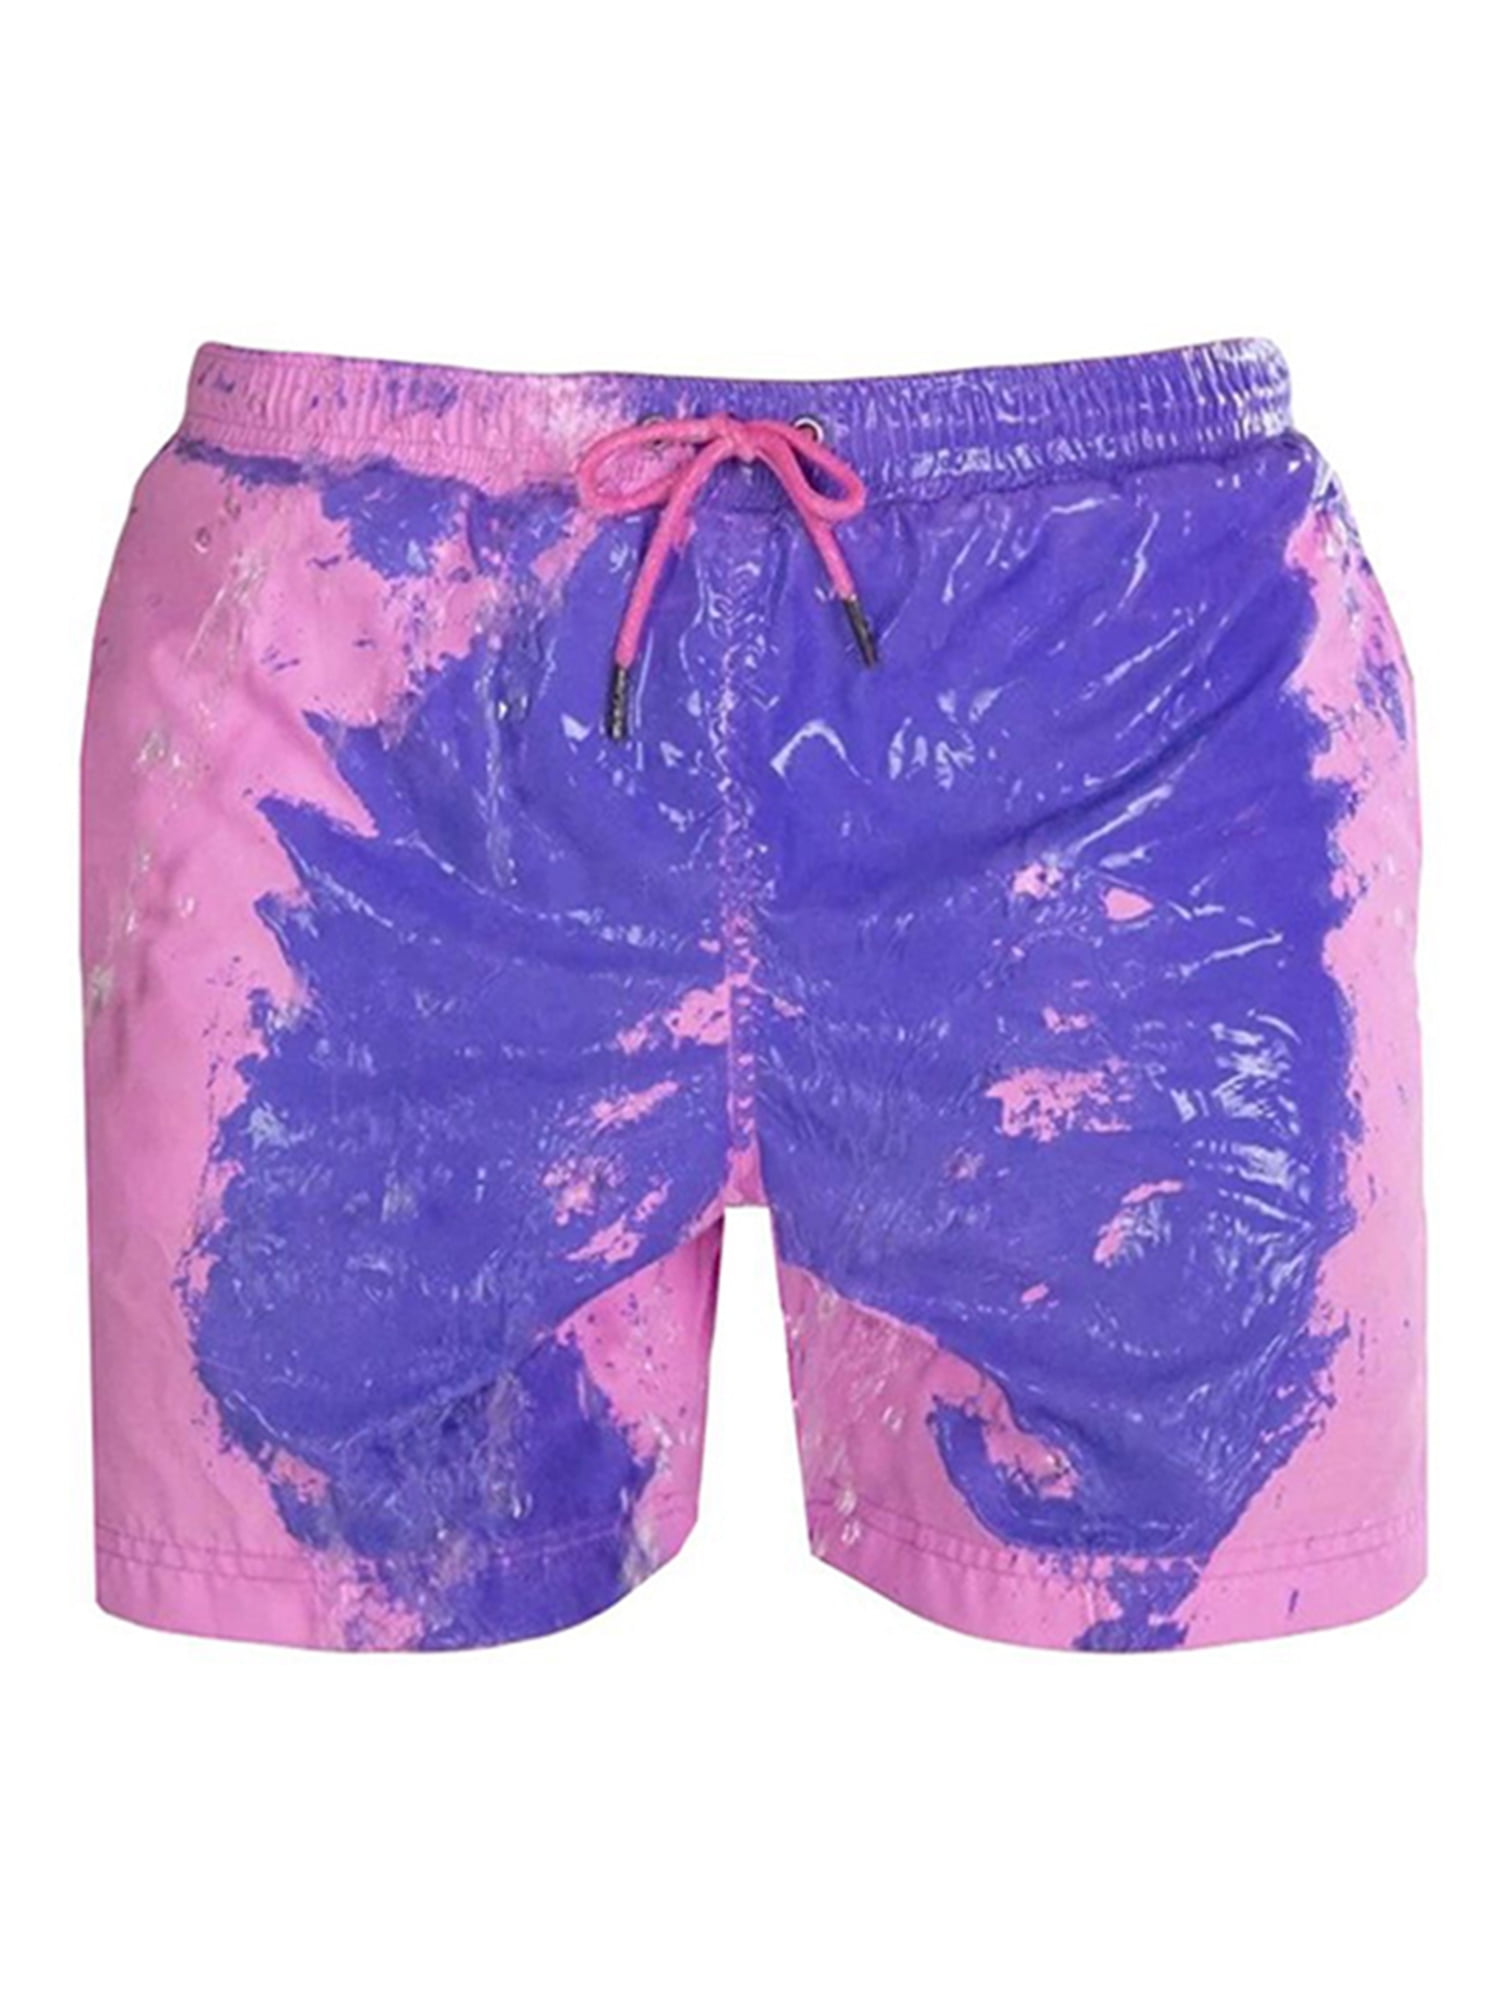 Mens Beach Swim Trunks Poppy Flowers Leaf Boxer Swimsuit Underwear Board Shorts with Pocket 